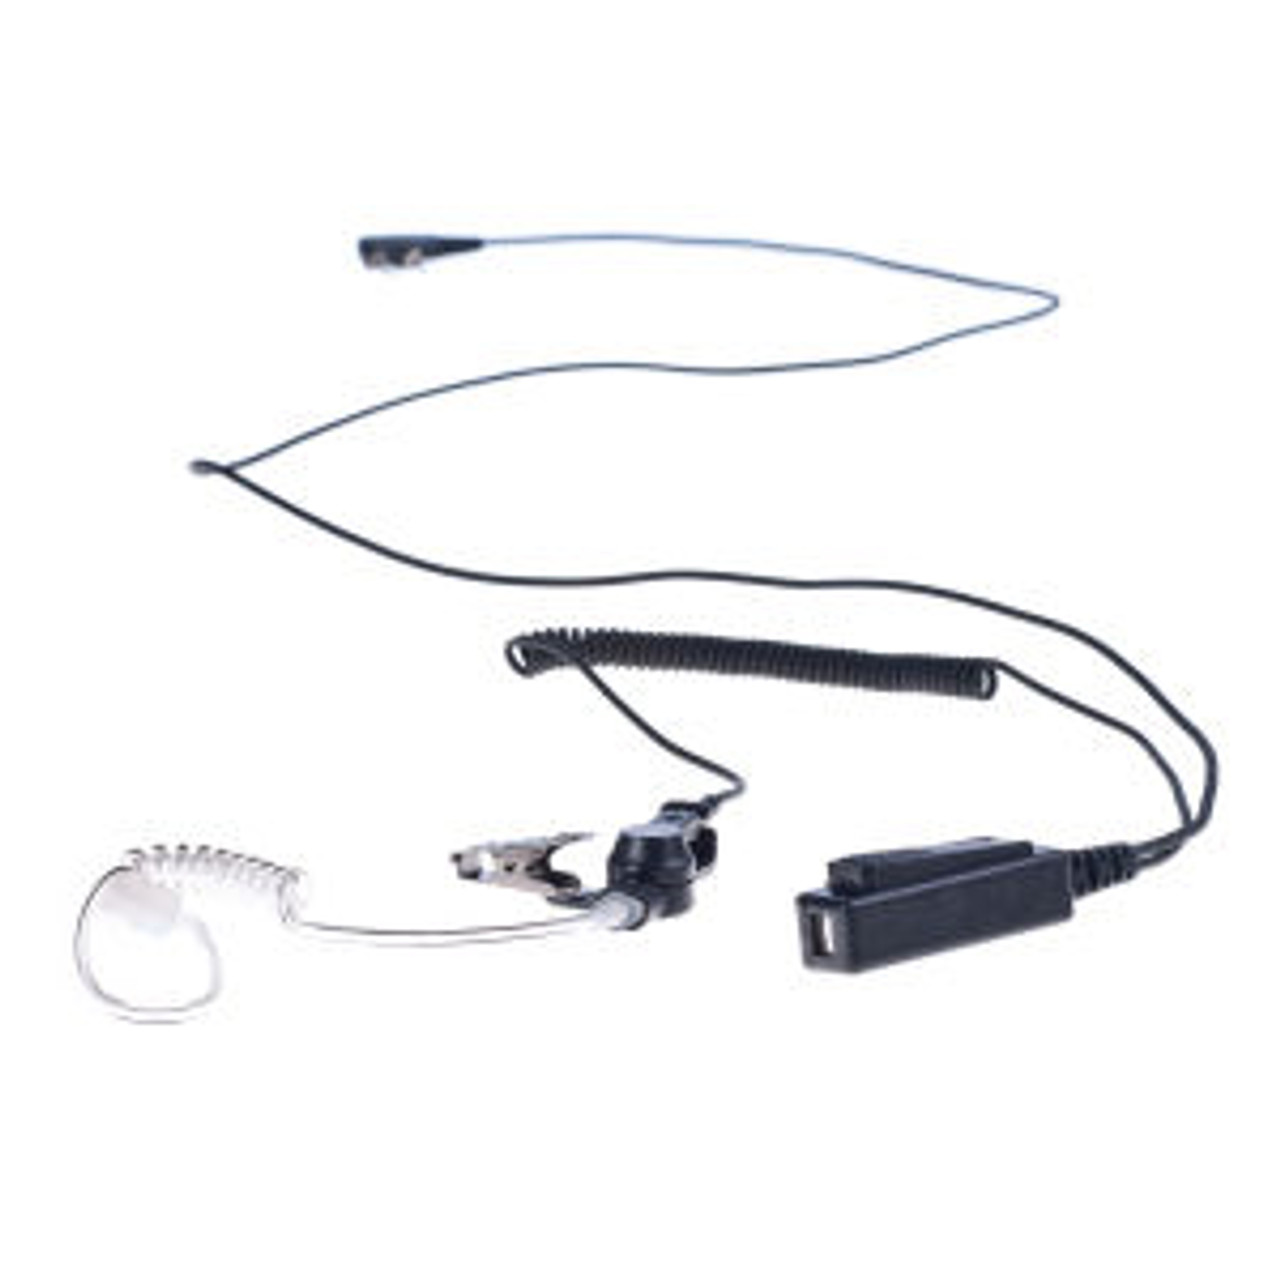 Relm RPU416 1-Wire Surveillance Kit